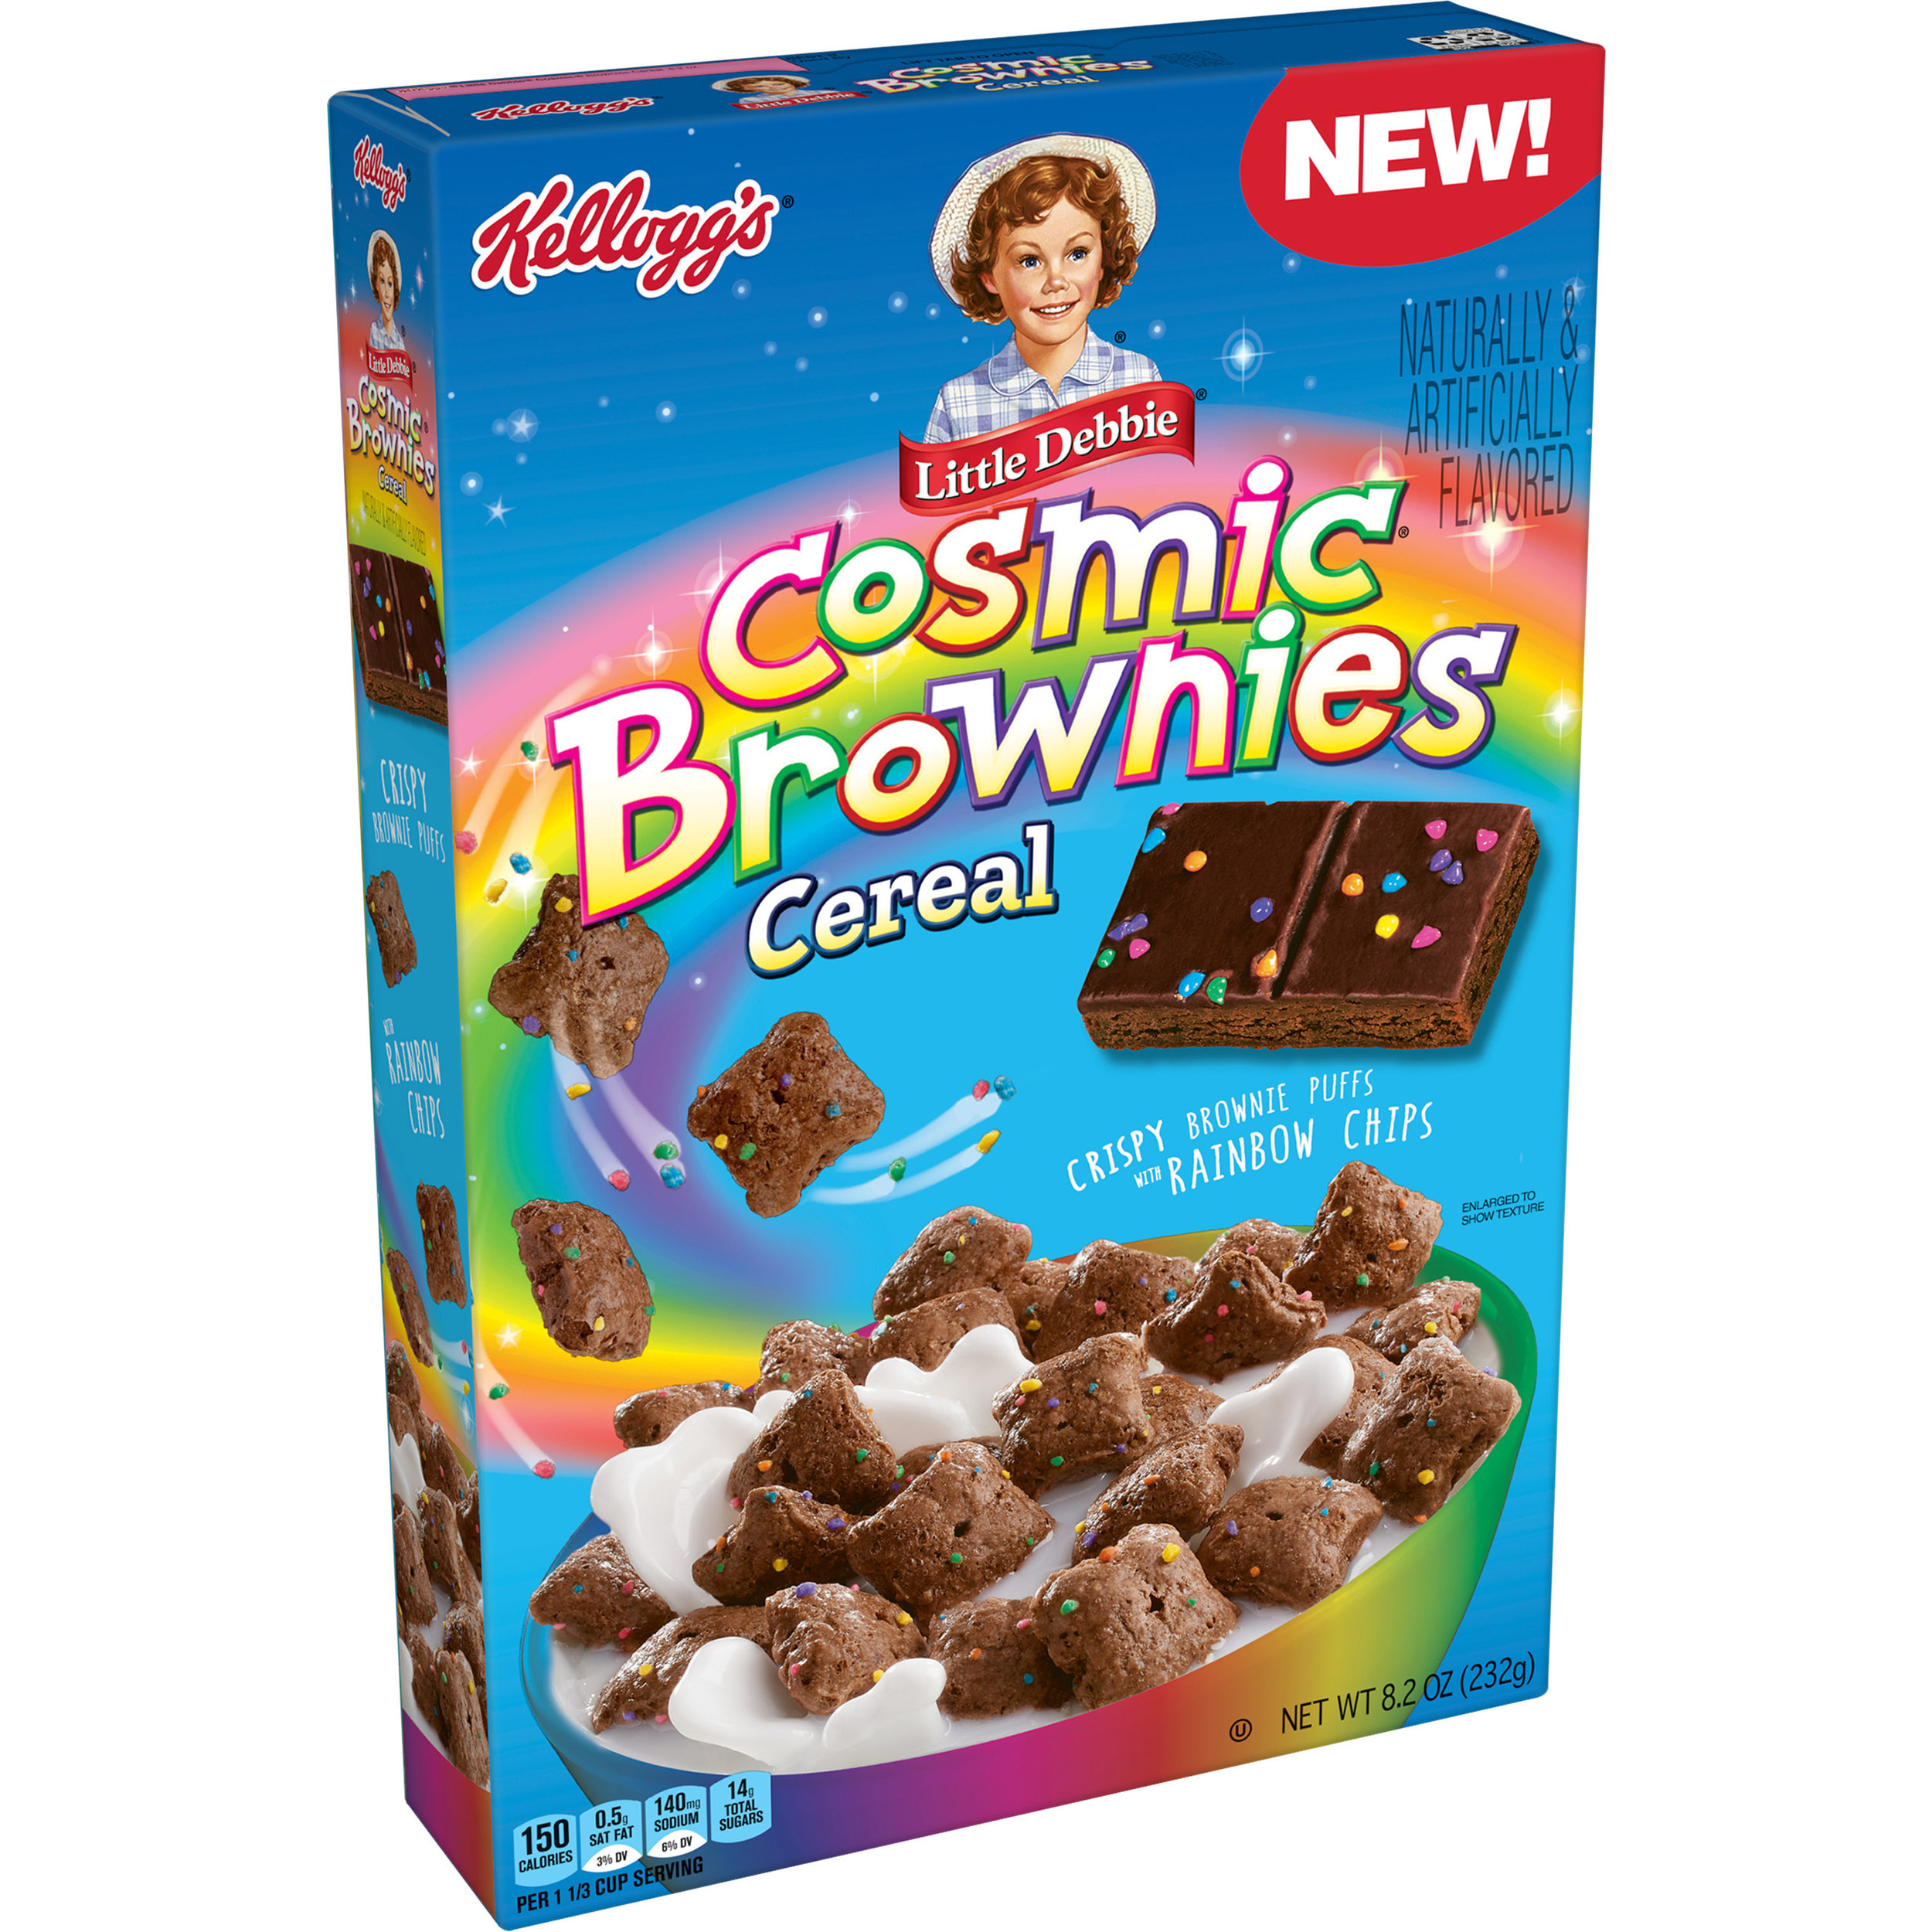 Cosmic Brownies Cereal